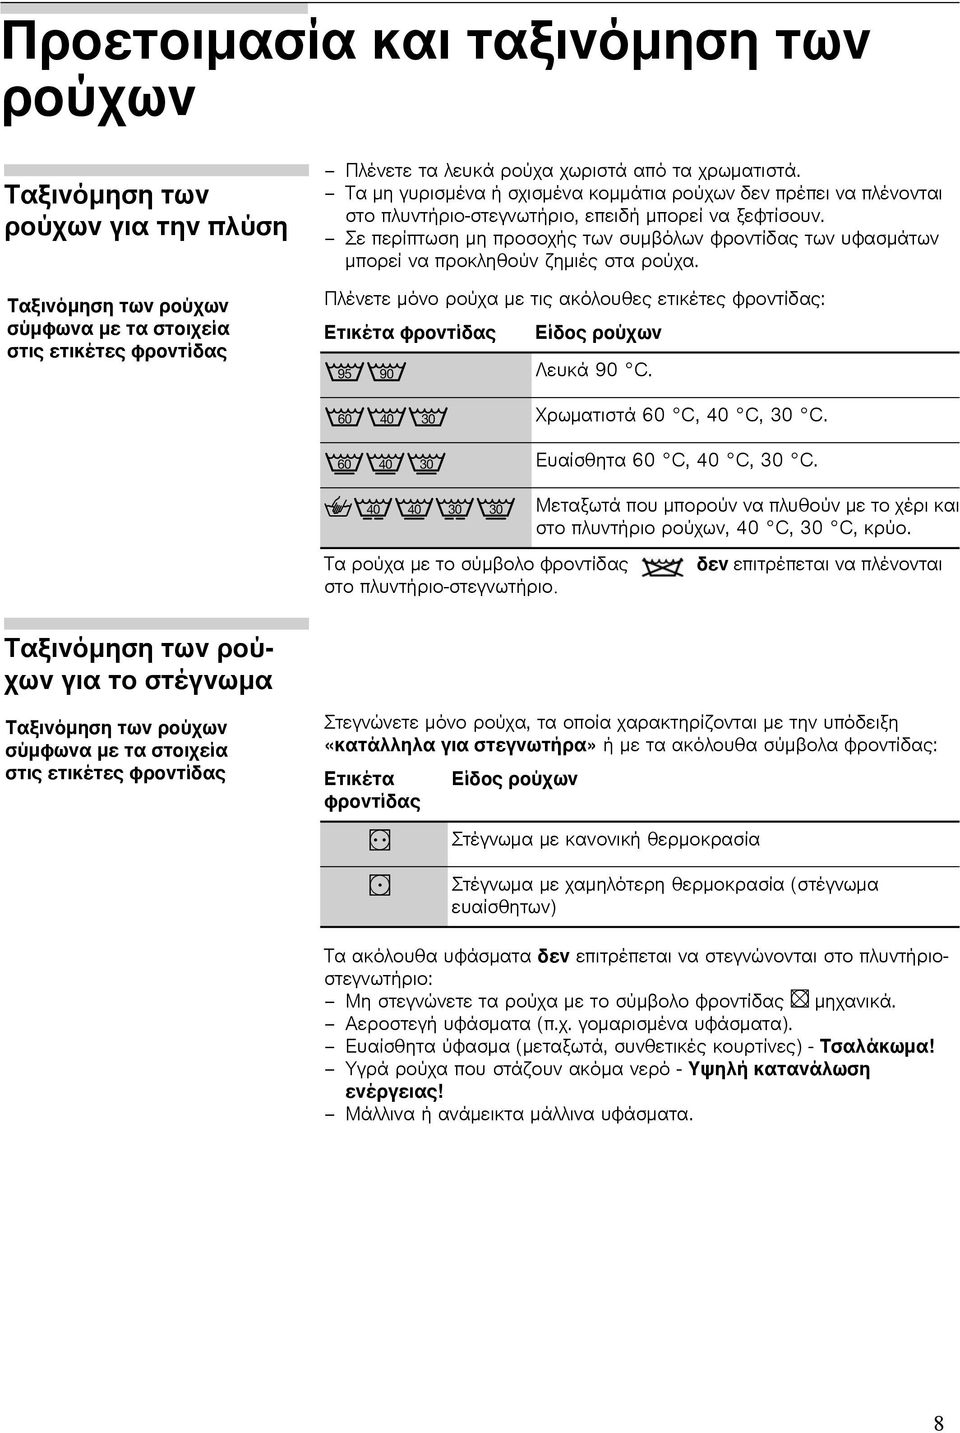 SIEMENS. Οδηγίες χρήσης el. πλυντήριο-στεγνωτήριο - PDF Free Download